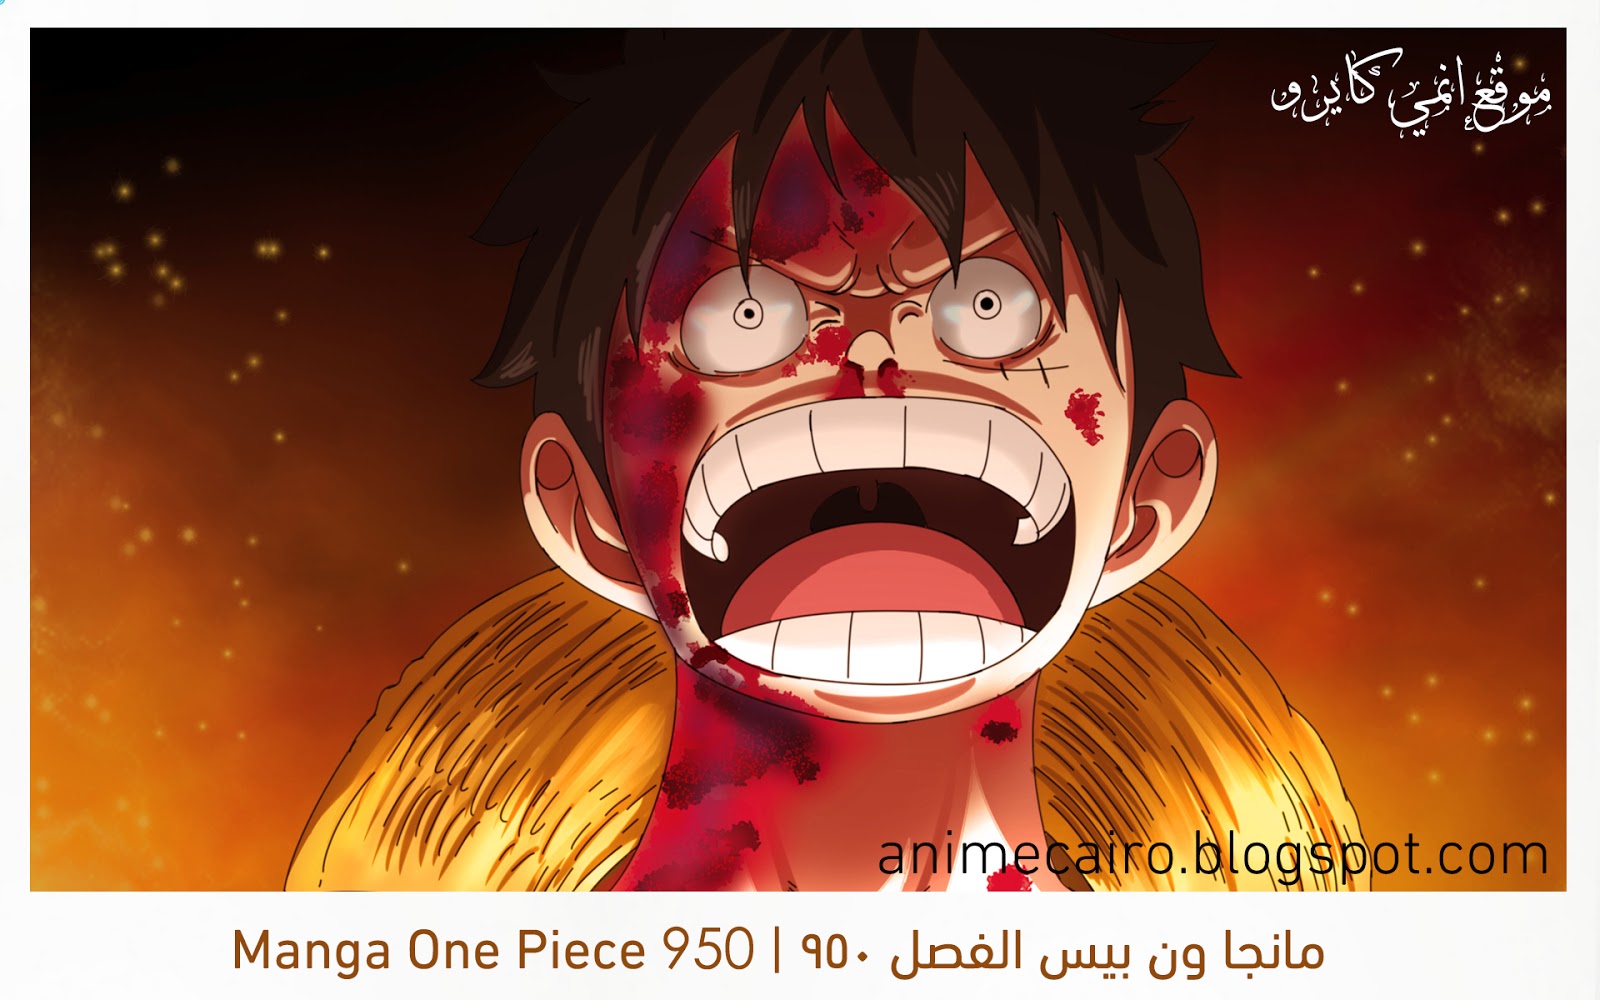 مانجا ون بيس الفصل 950 مترجم اون لاين Manga One Piece 950